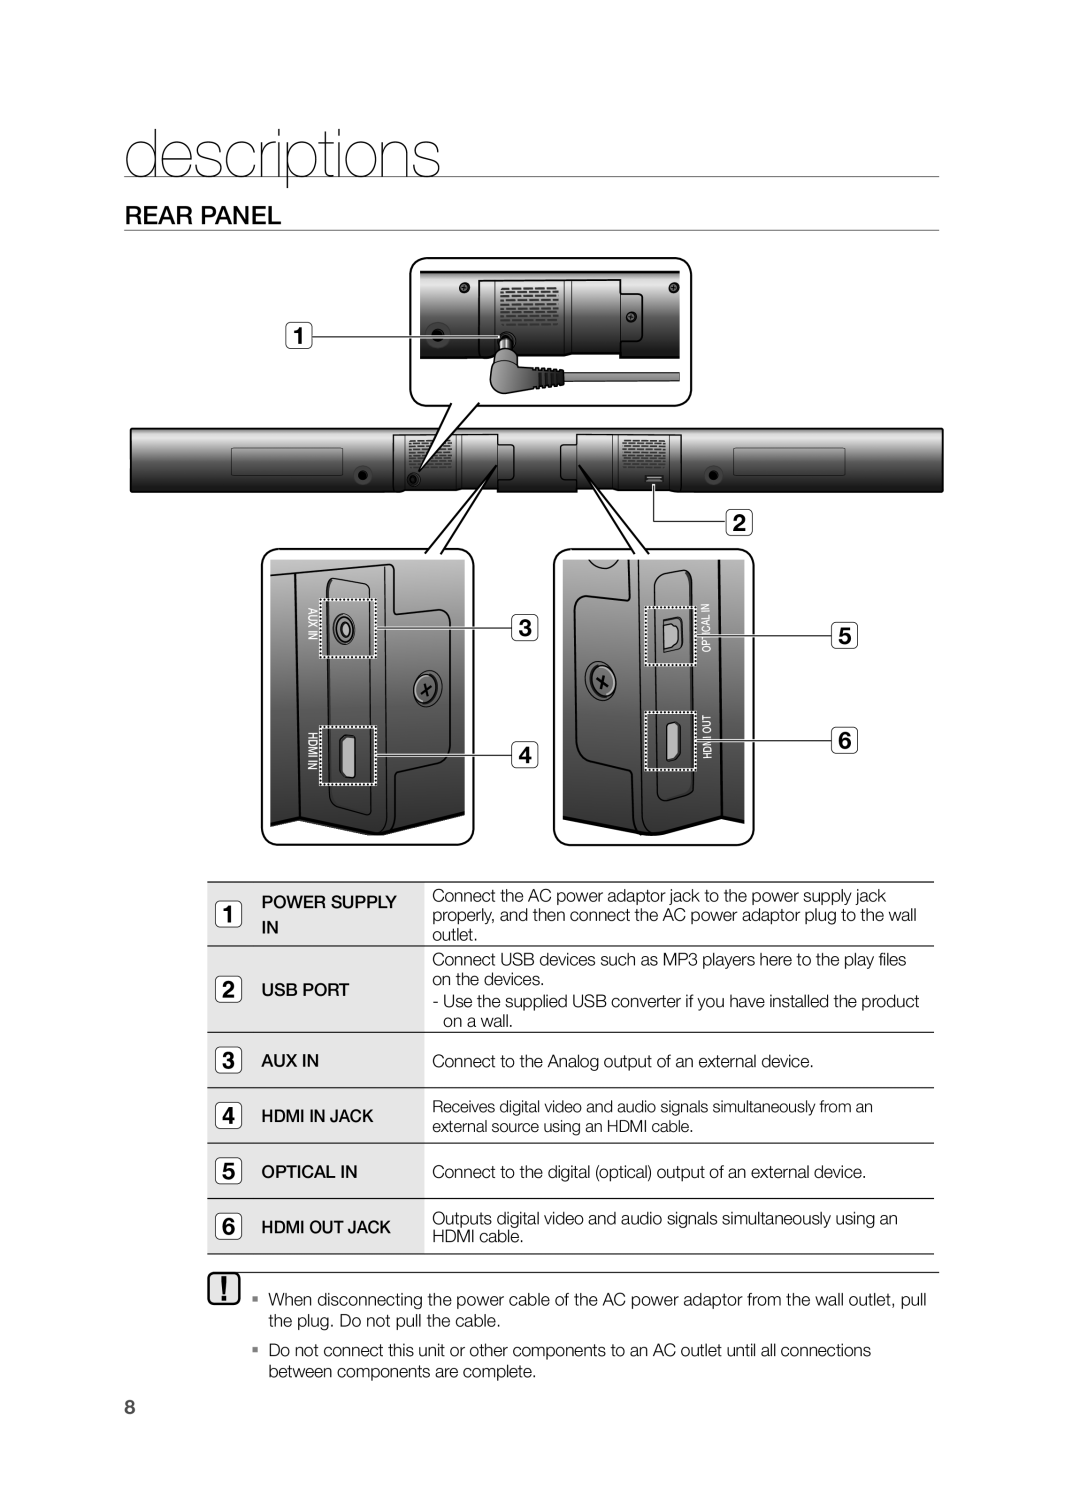 Samsung HW-FM55C user manual Rear Panel, descriptions 